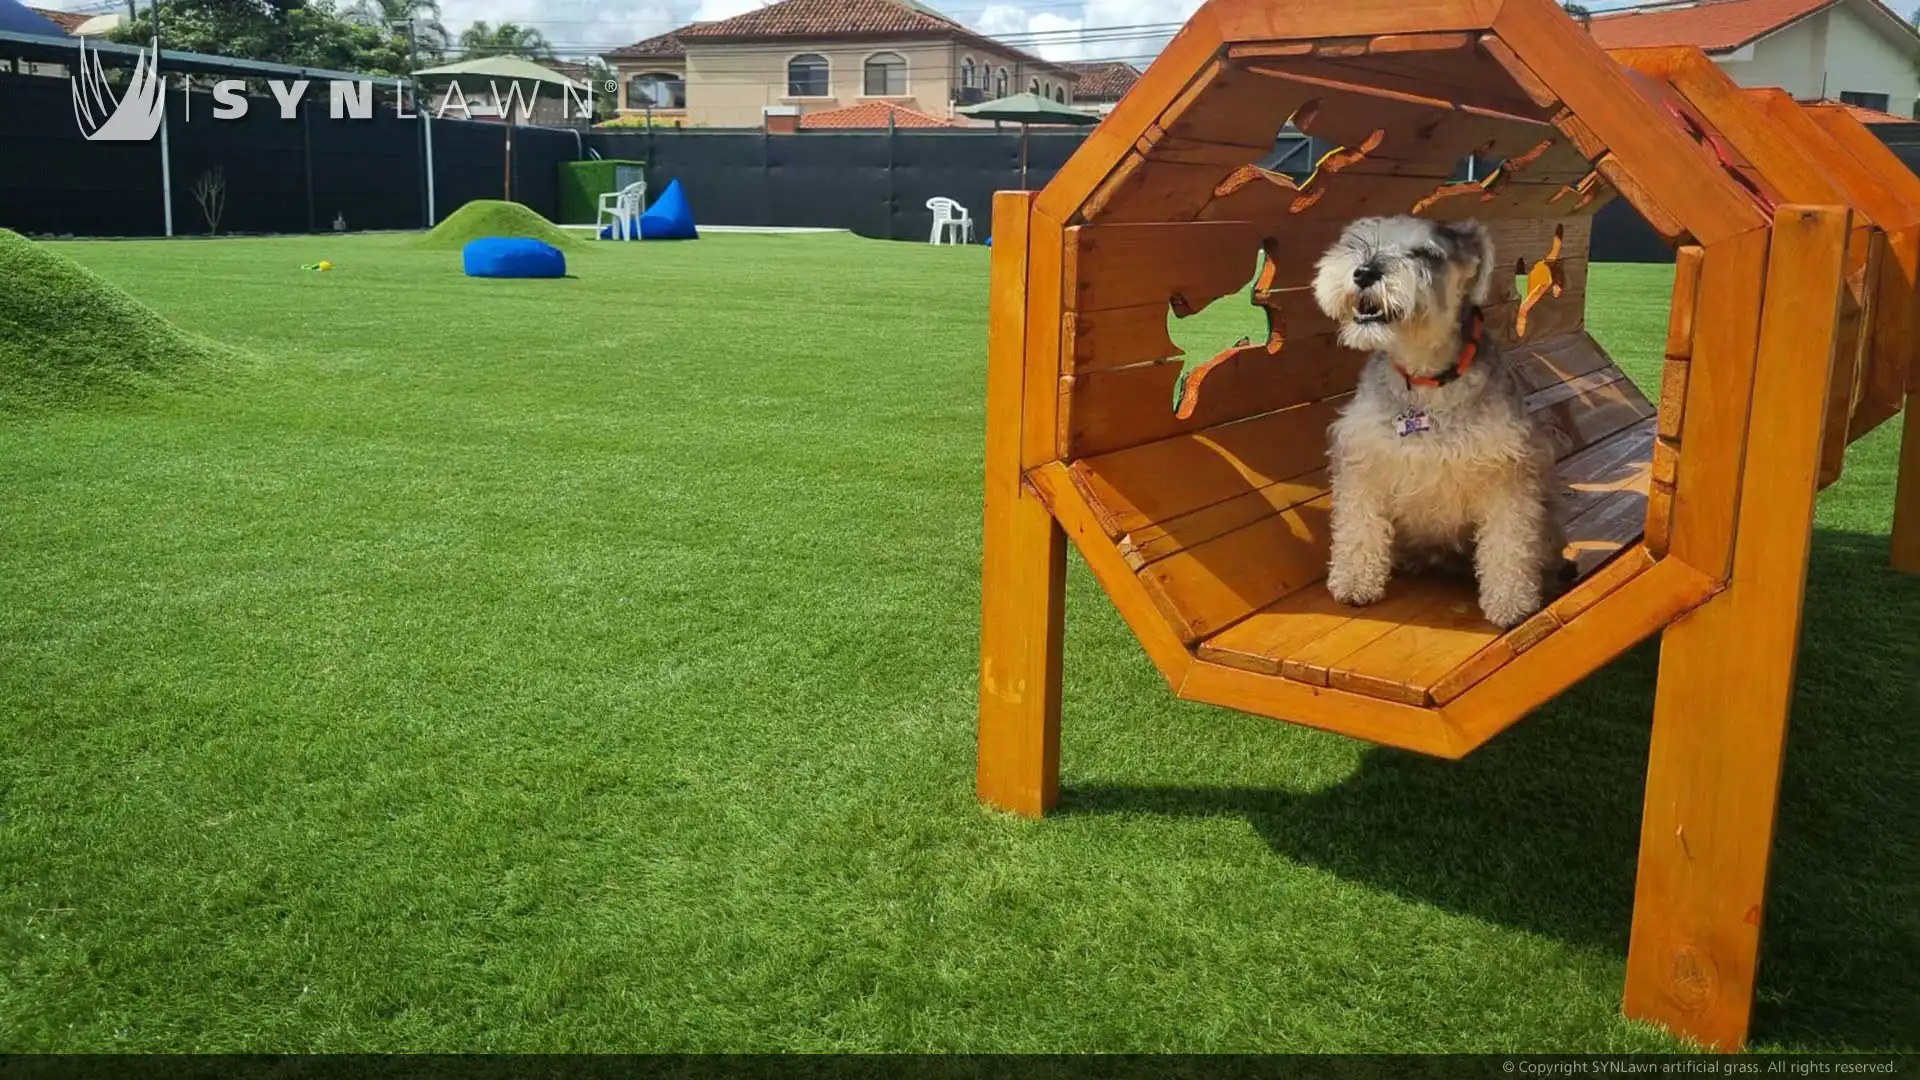 Costa Rica's grootste hondenopvang-upgradefaciliteit met huisdierveilig gras